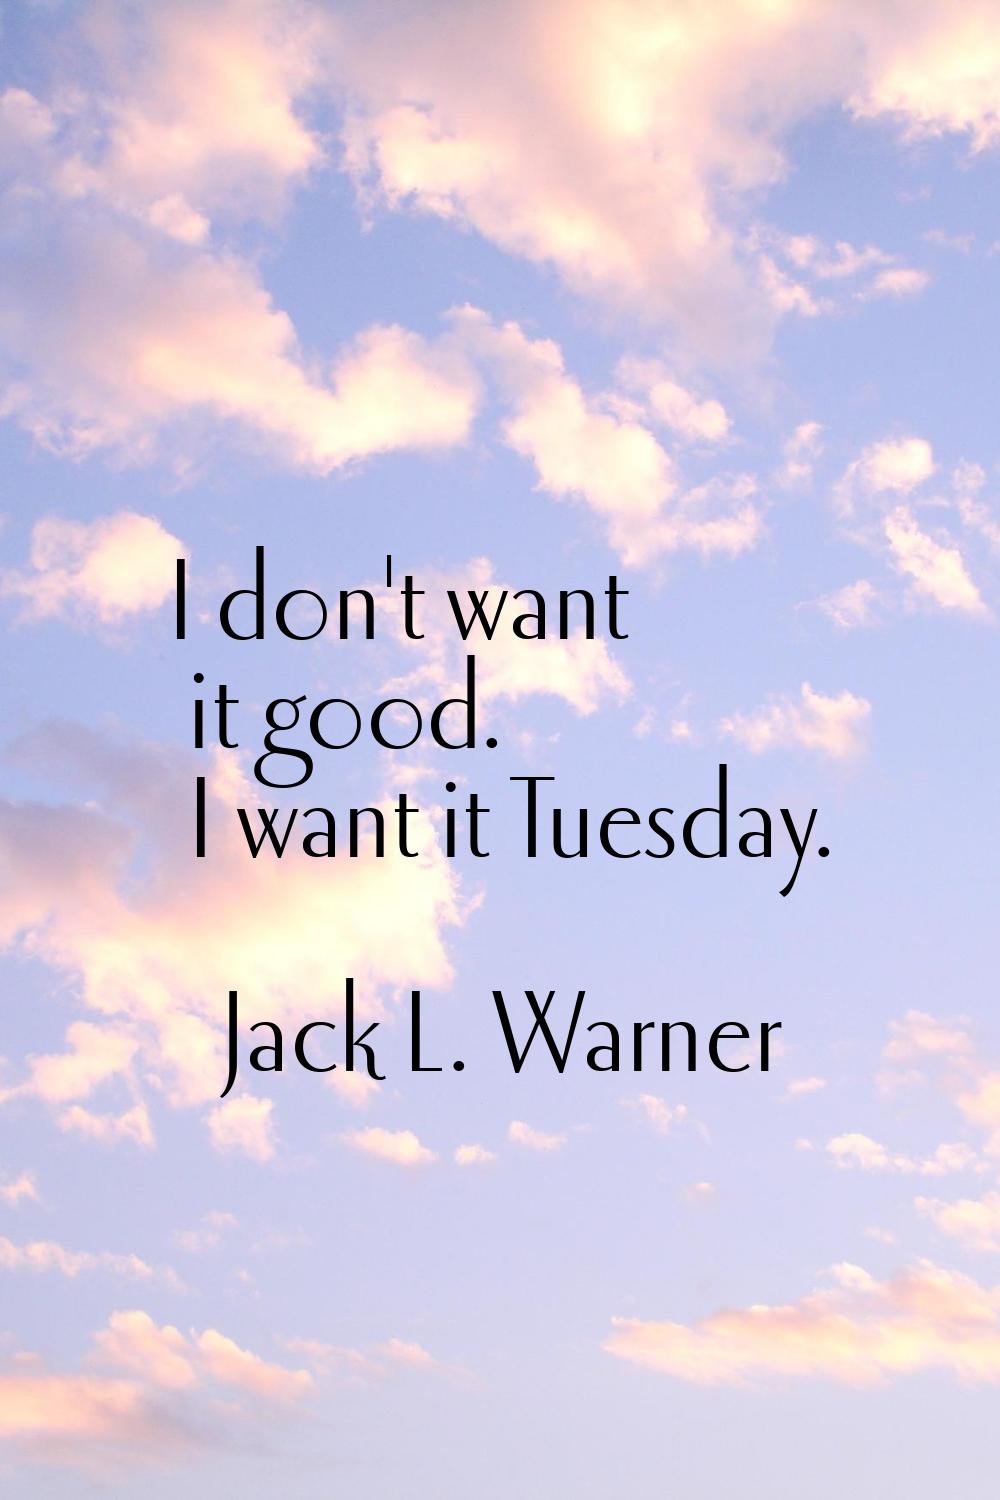 I don't want it good. I want it Tuesday.